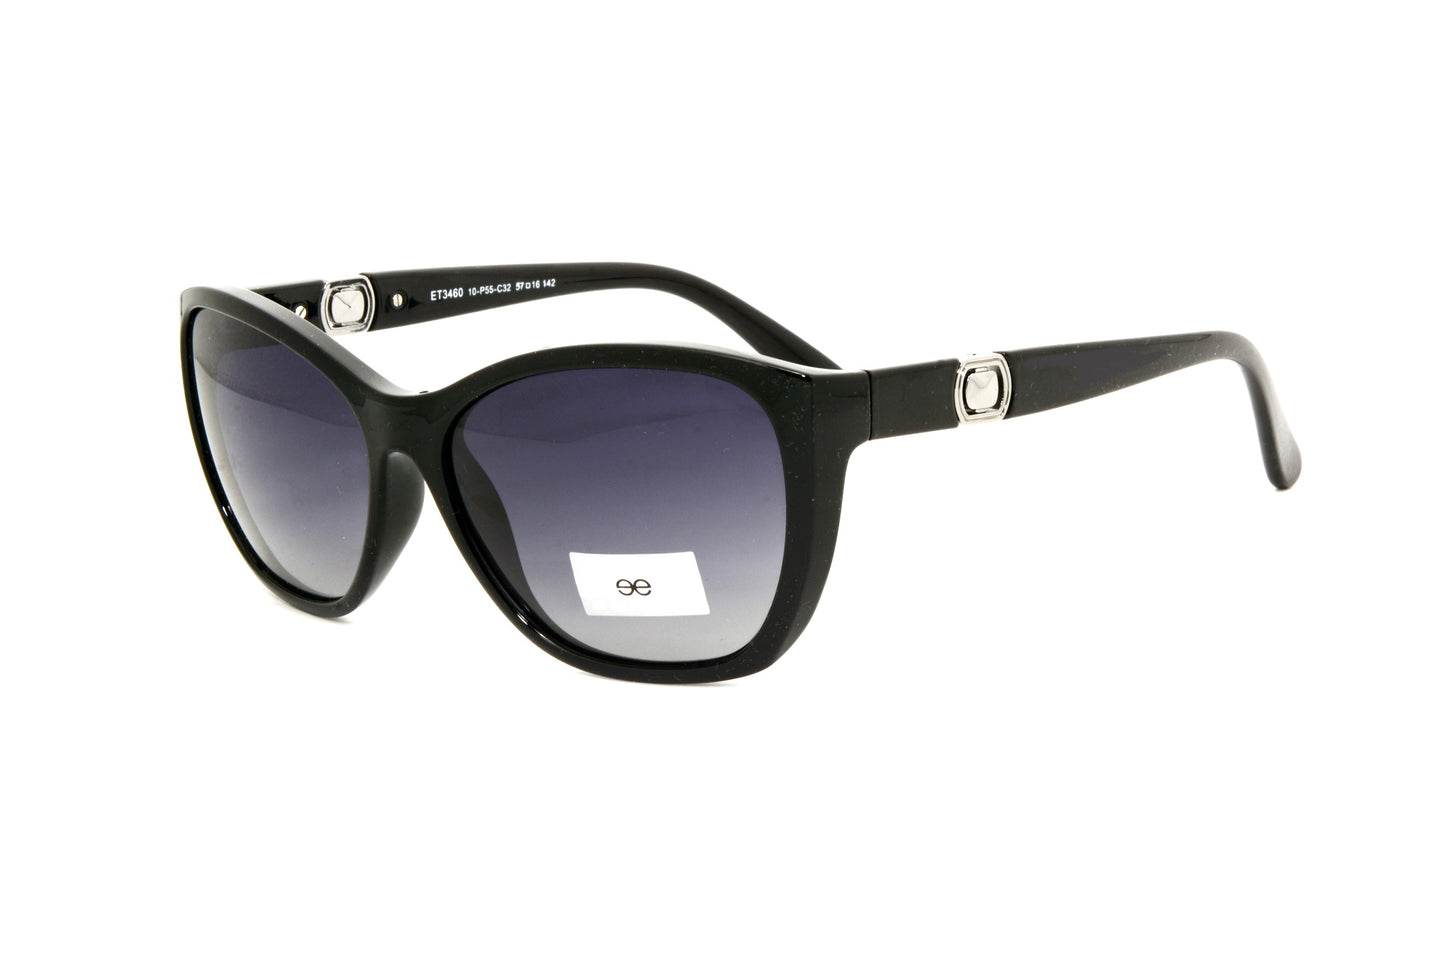 Eternal sunglasses ET3460 10-P55-C32